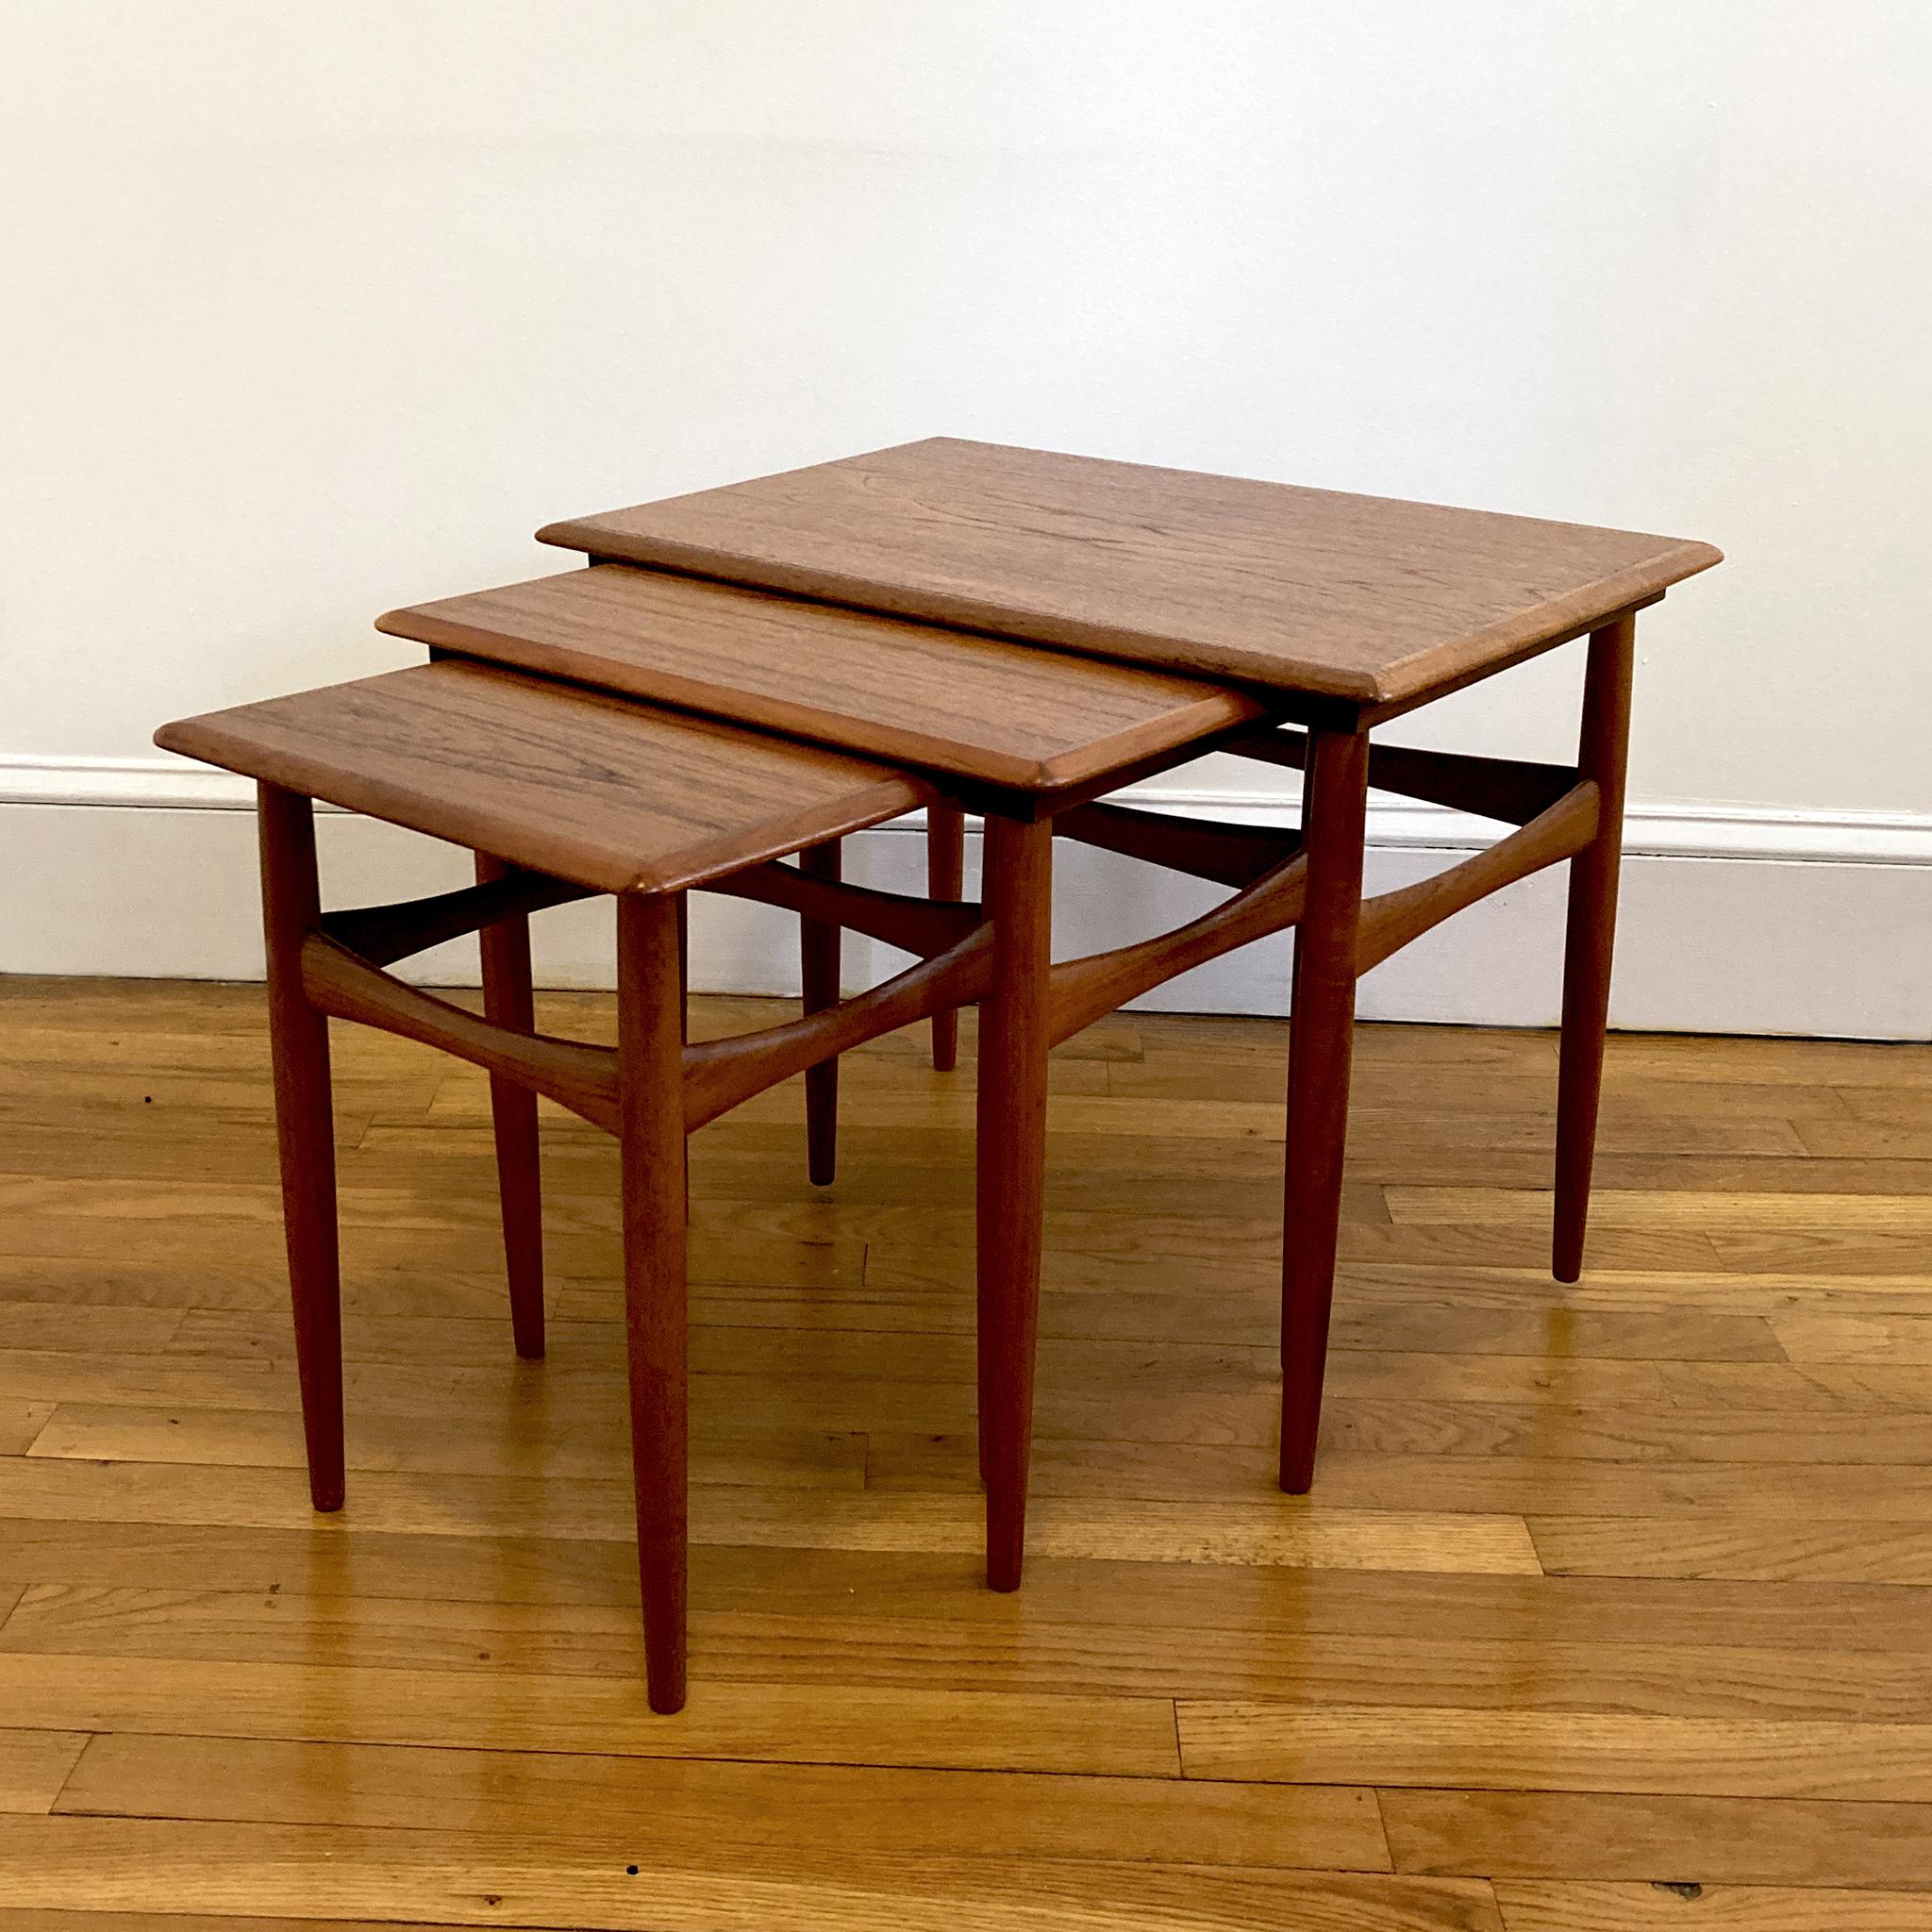 Circa 1960s, set of (3) Danish mid-century nesting tables designed by Kai Kristiansen for Skovmand & Andersen. Smallest table is marked underneath: 